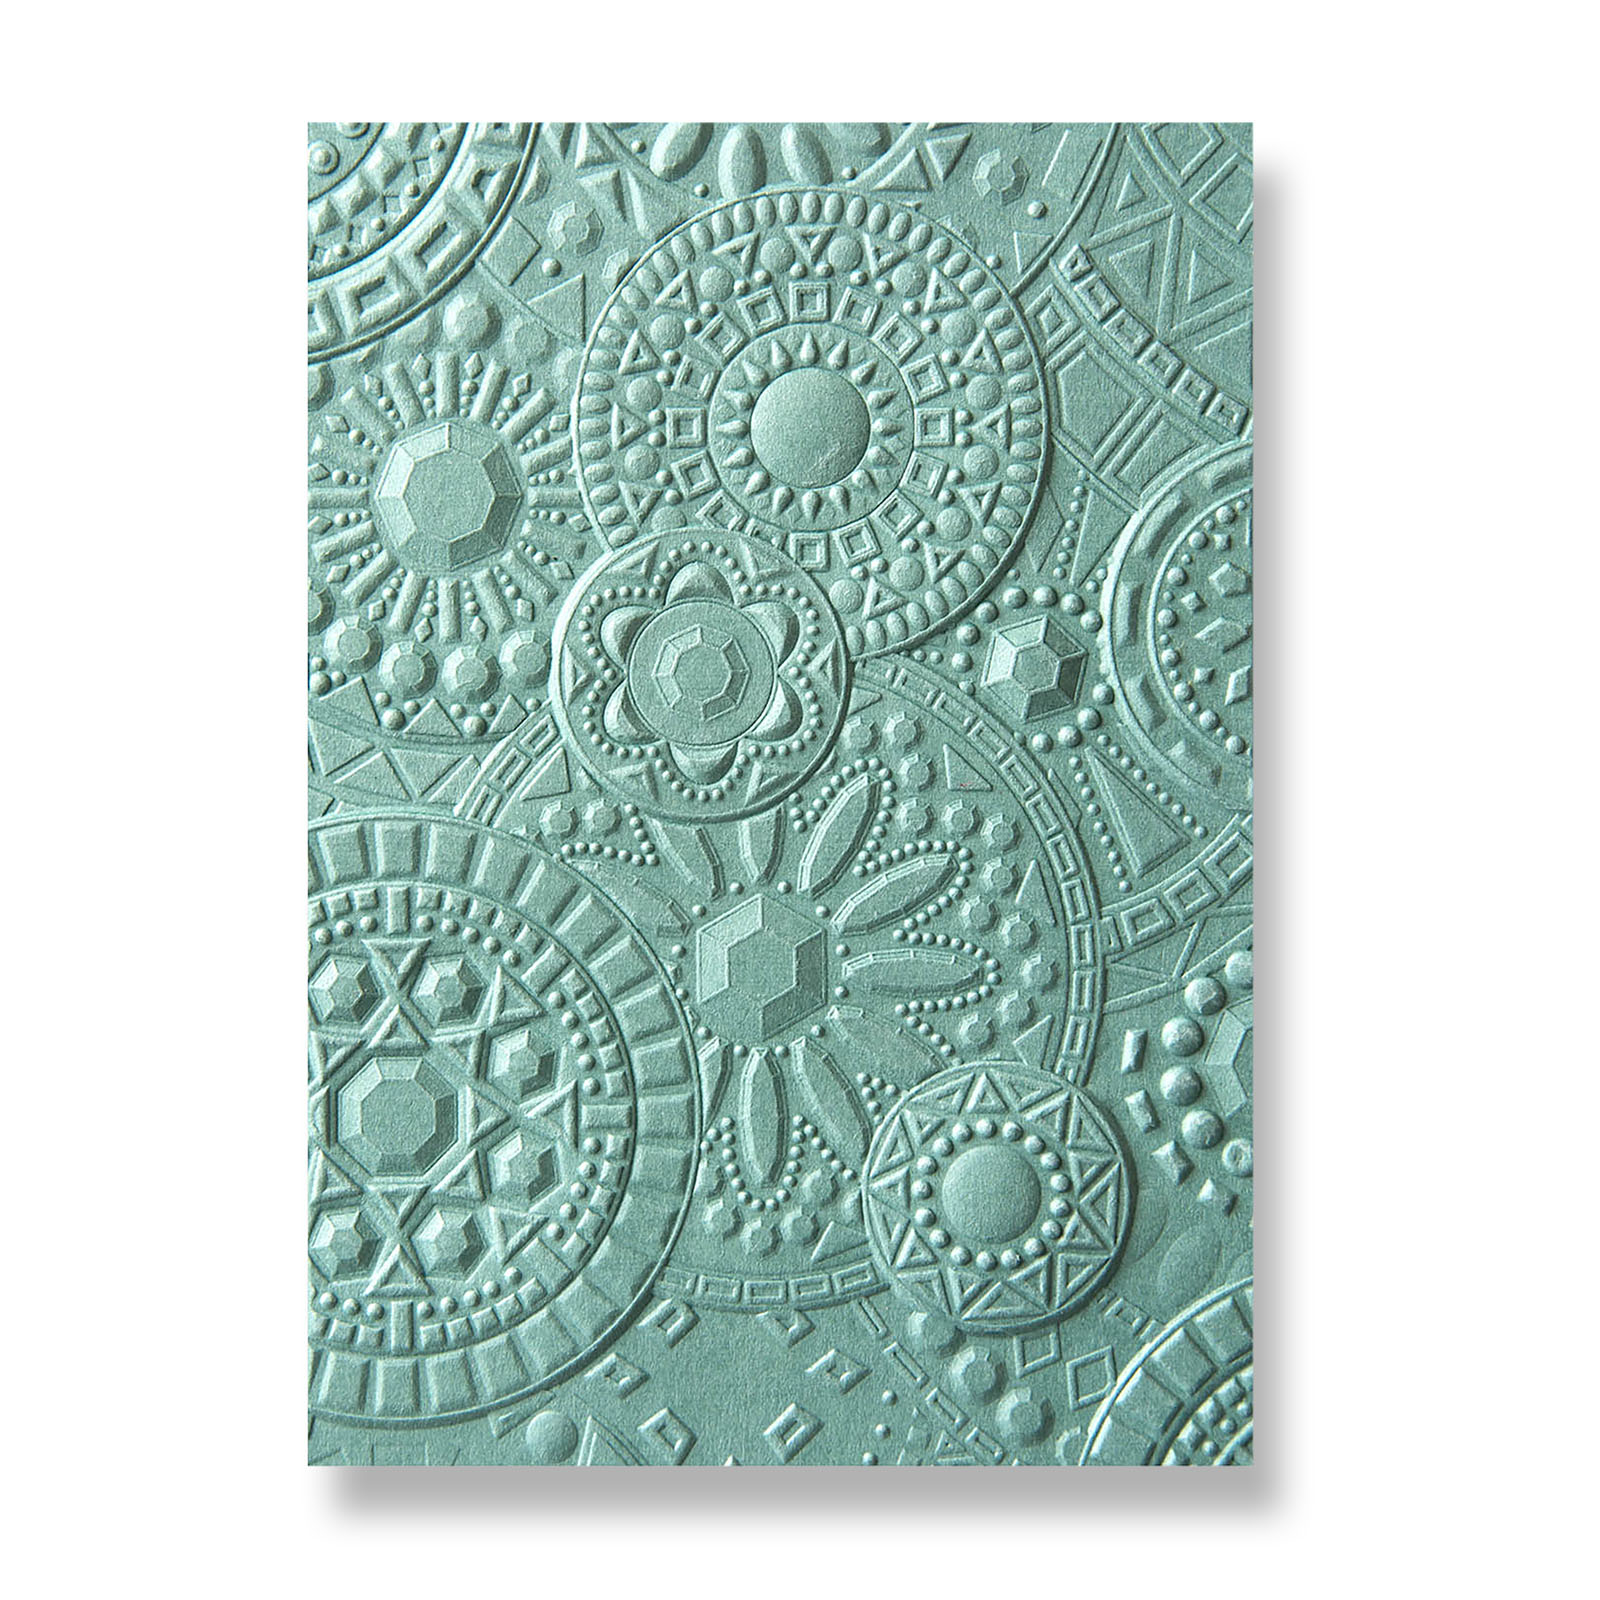 Sizzix • Carpeta de estampado en relieve con textura tridimensional Mosaic Gems de Courtney Chilson